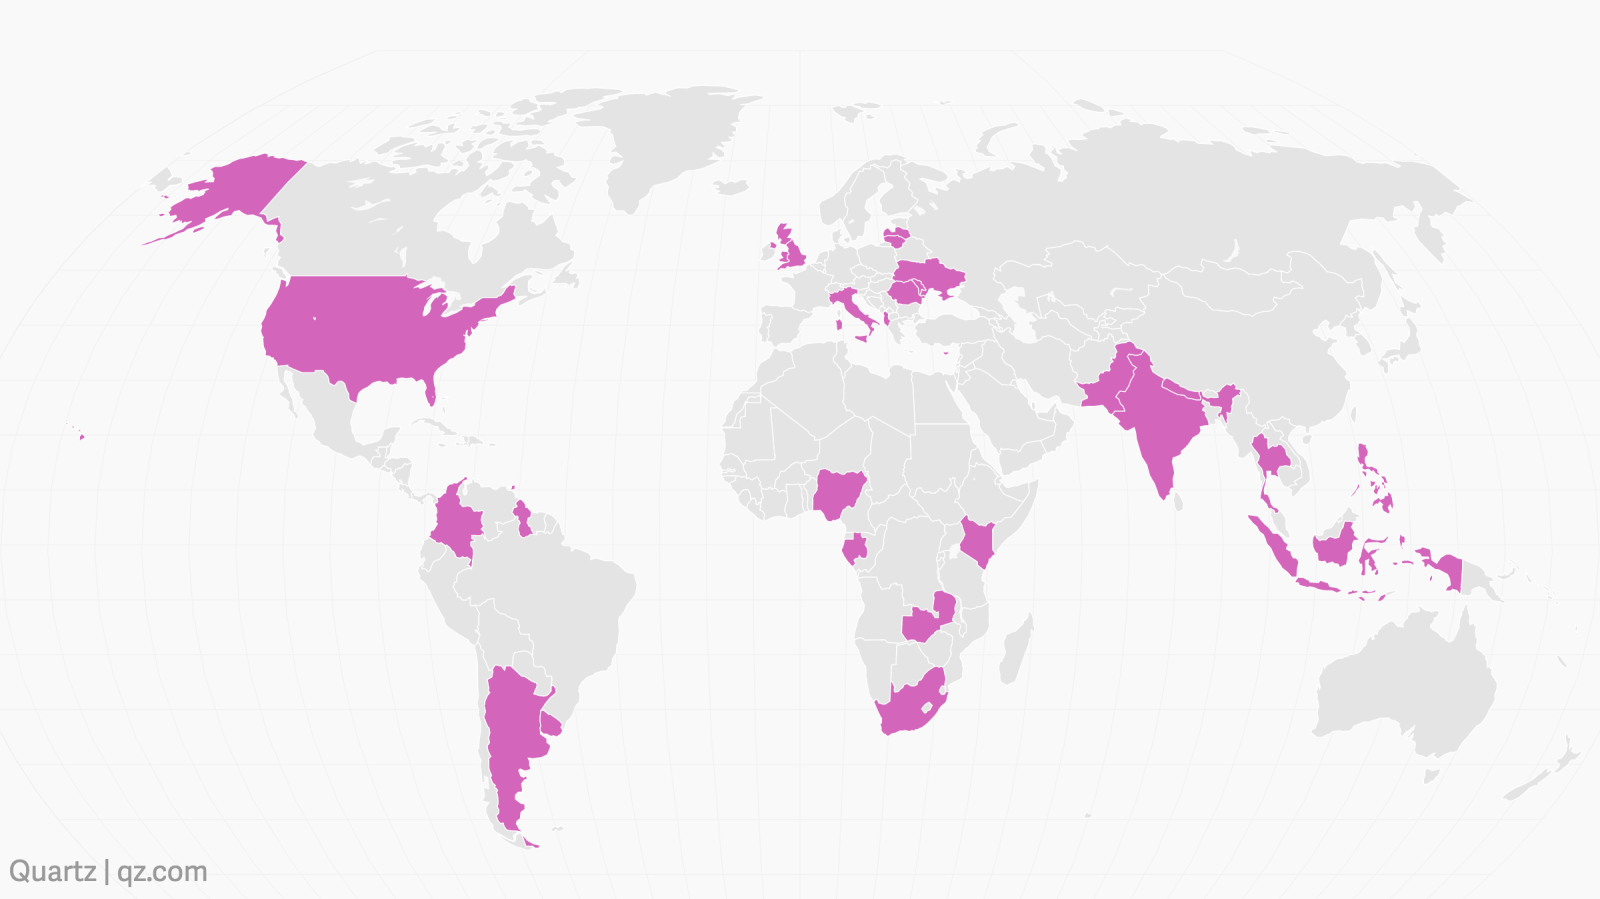 countries where Cambridge analytics meddled